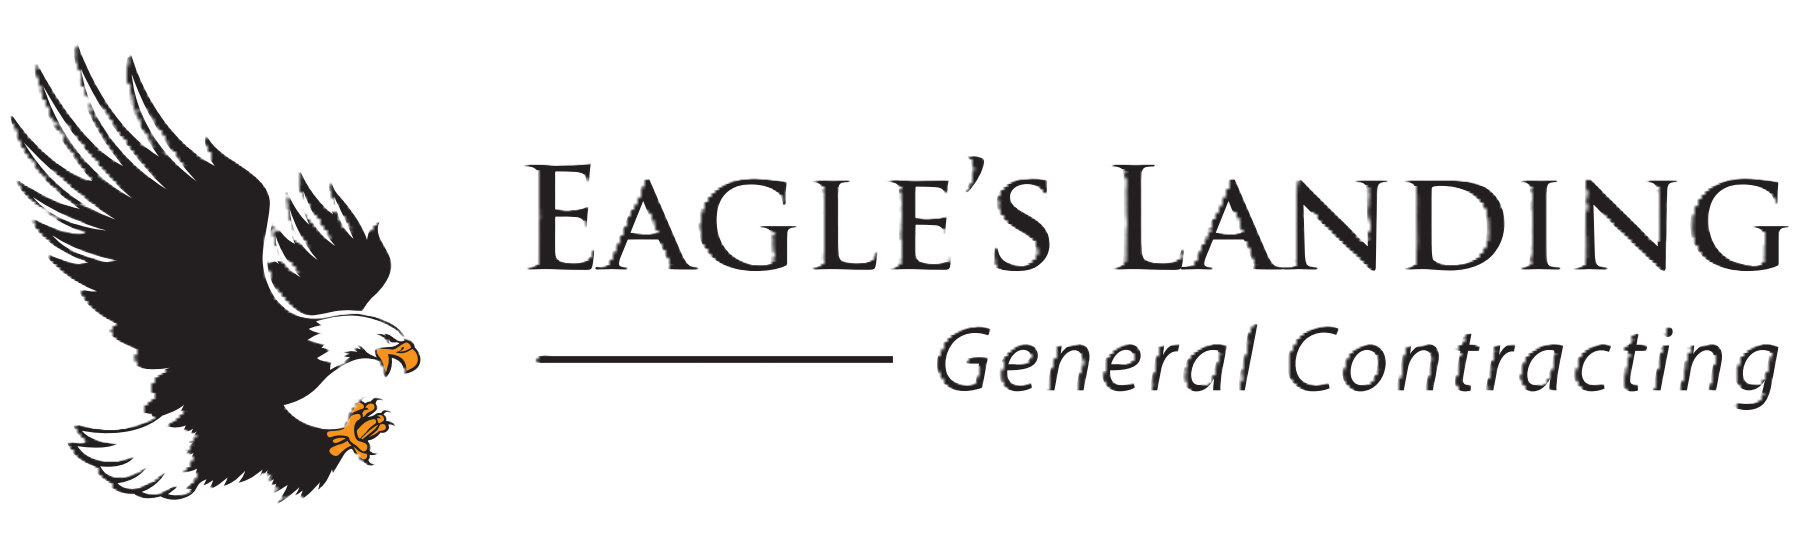 Eagles Landing General Contracting Logo